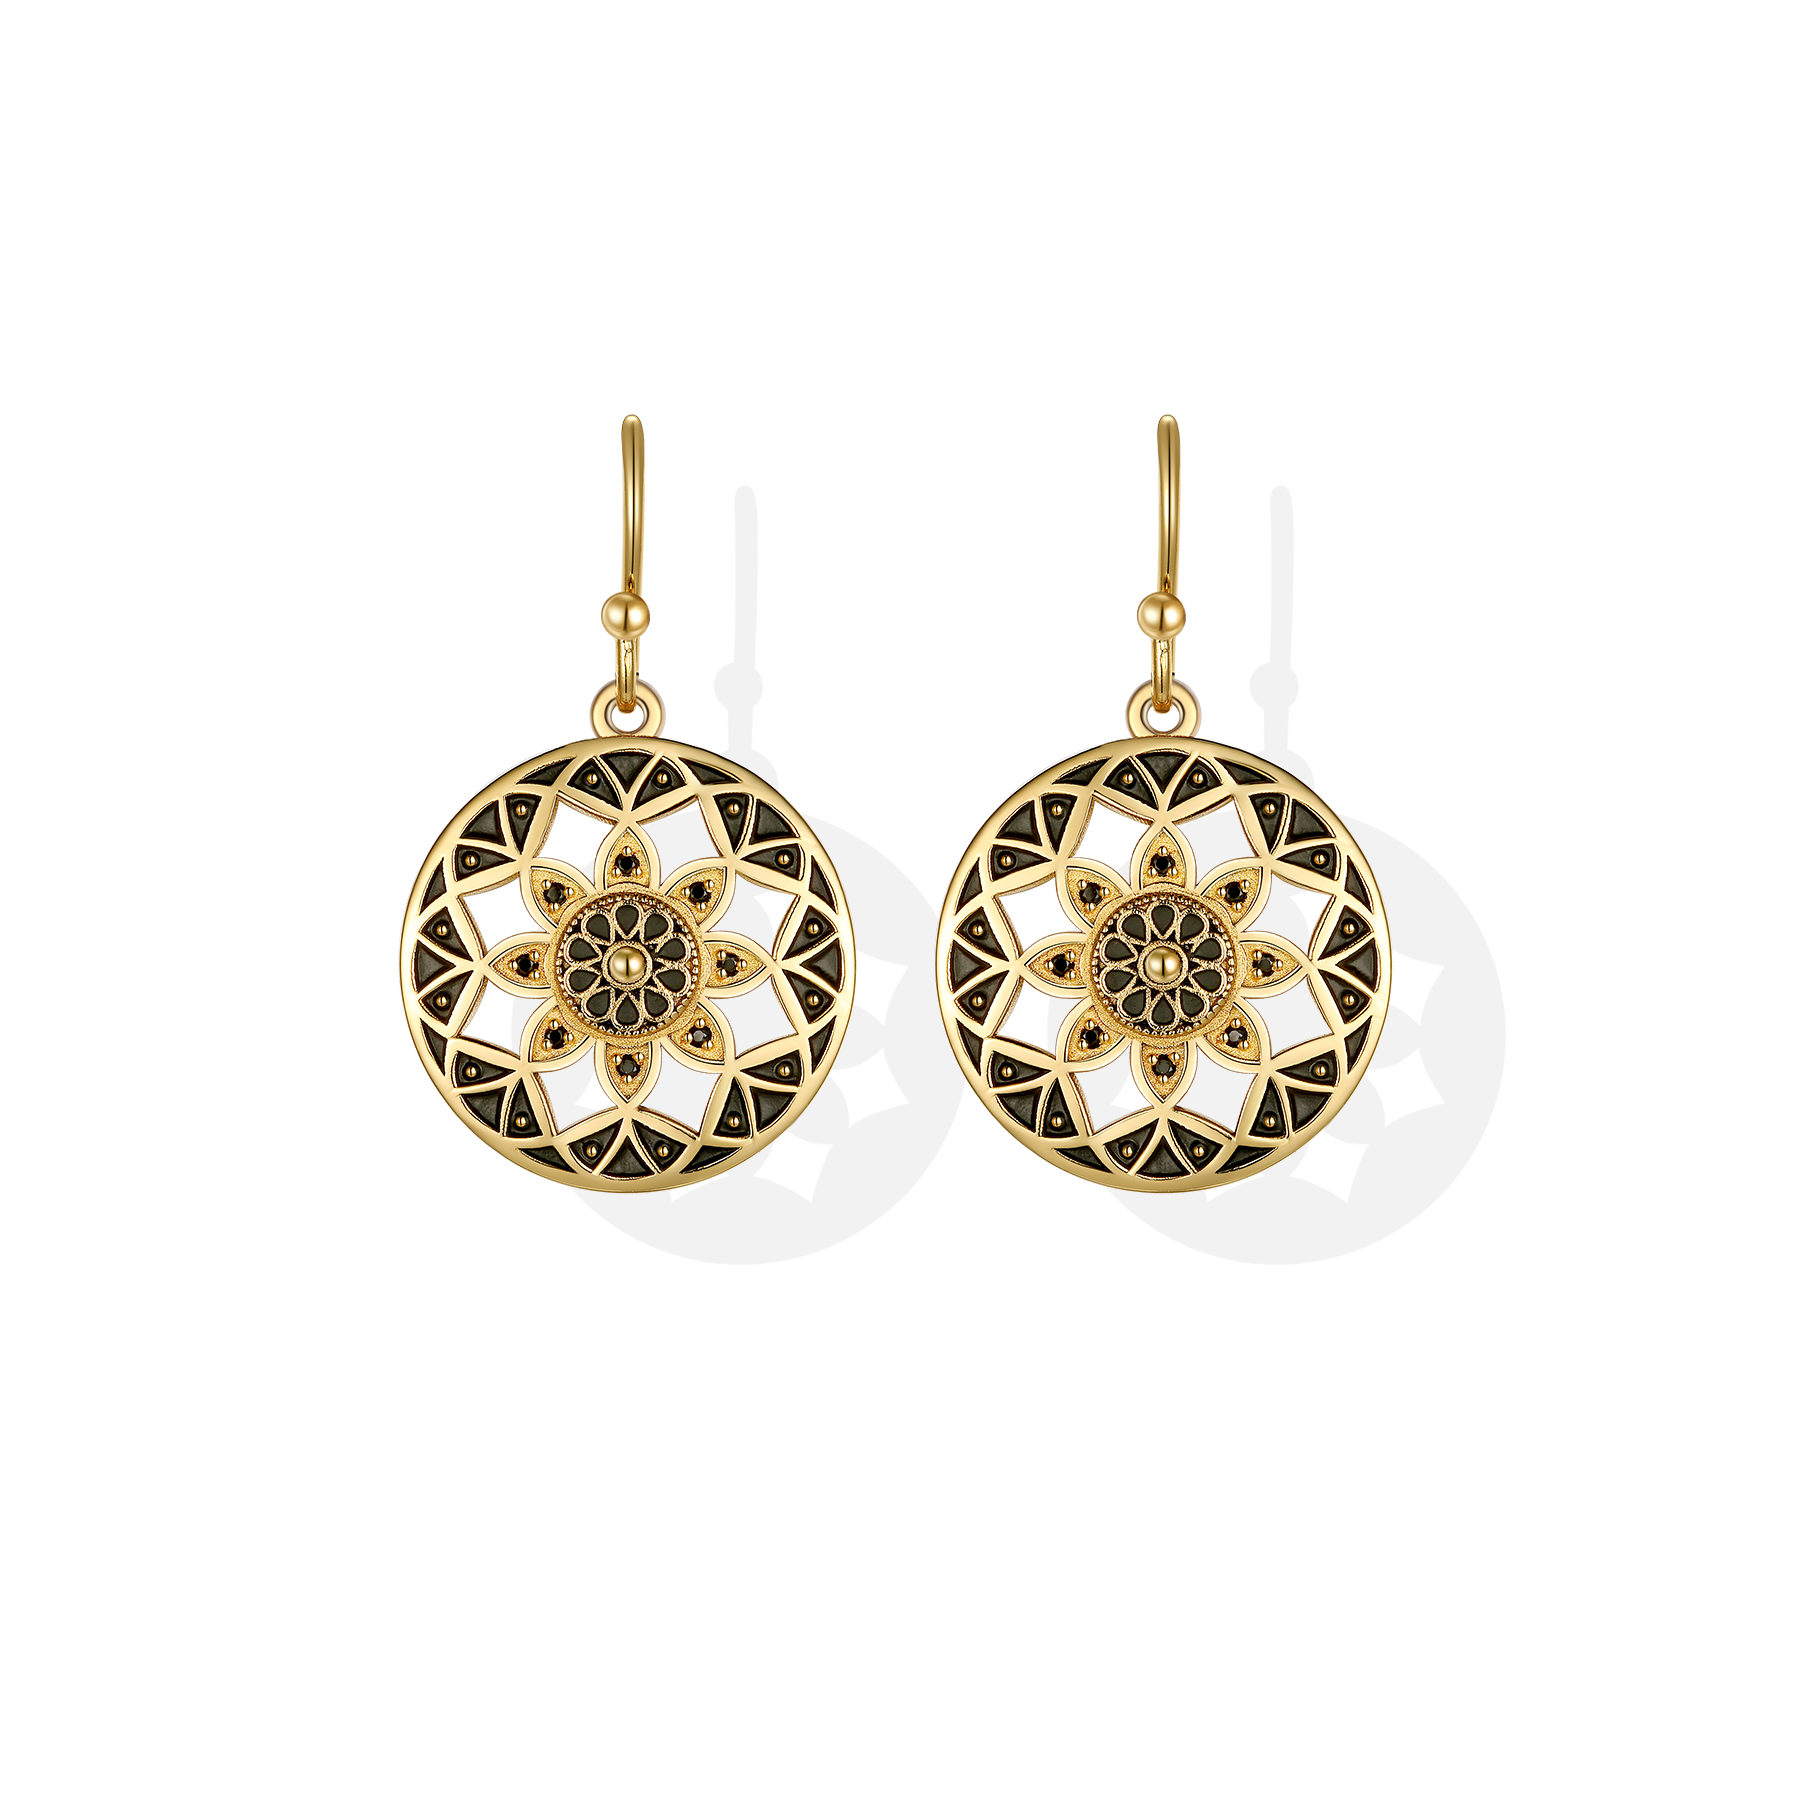 Mandala design elegant earrings with black oil plating